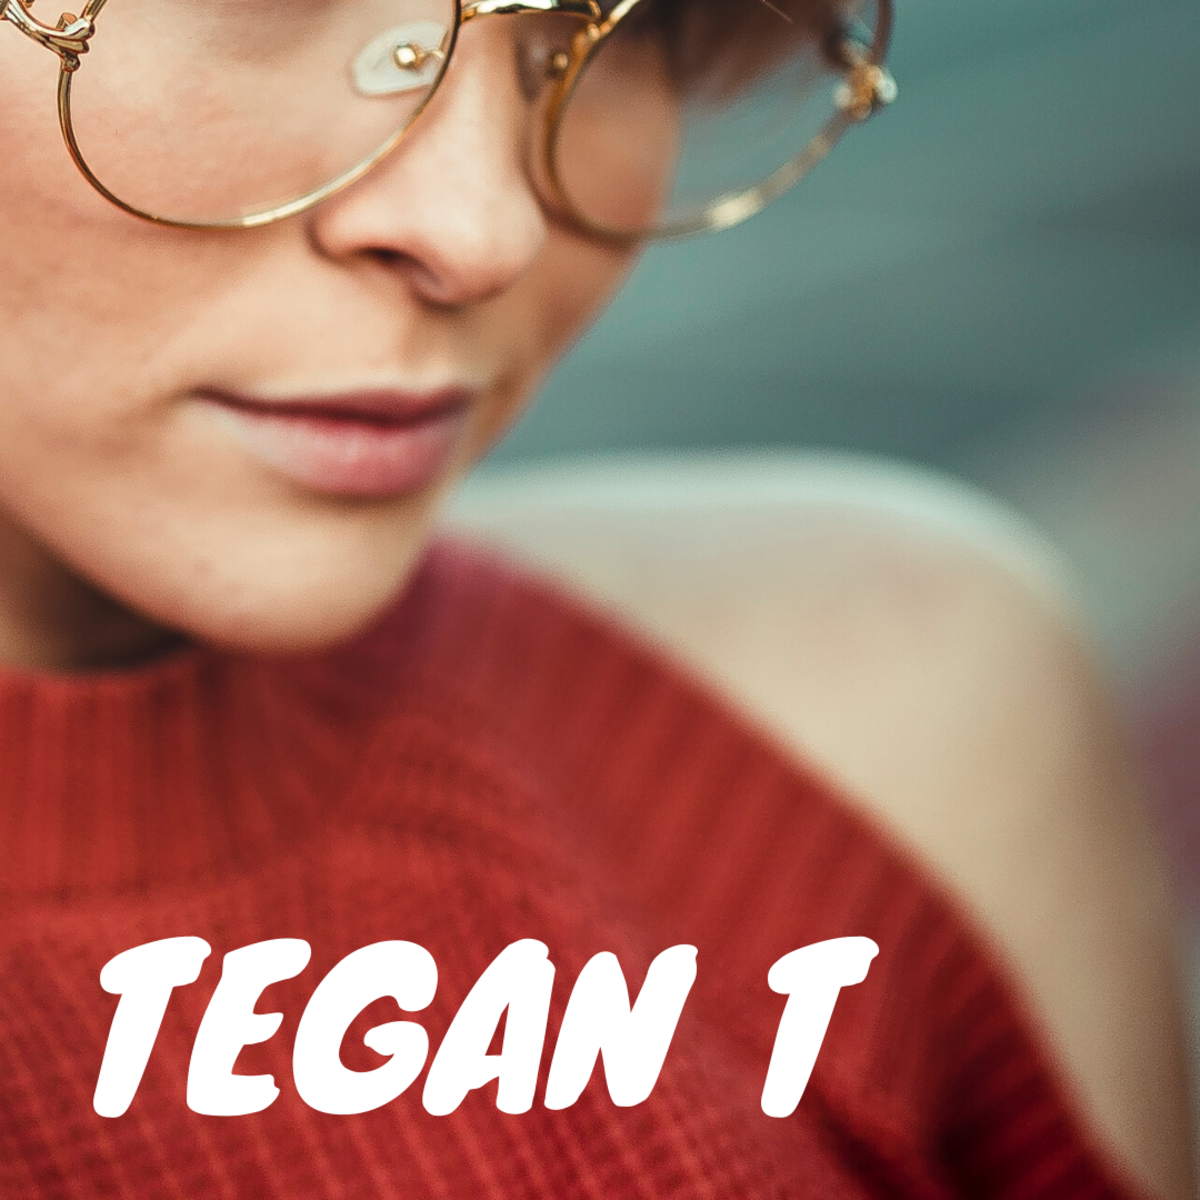 Tegan T